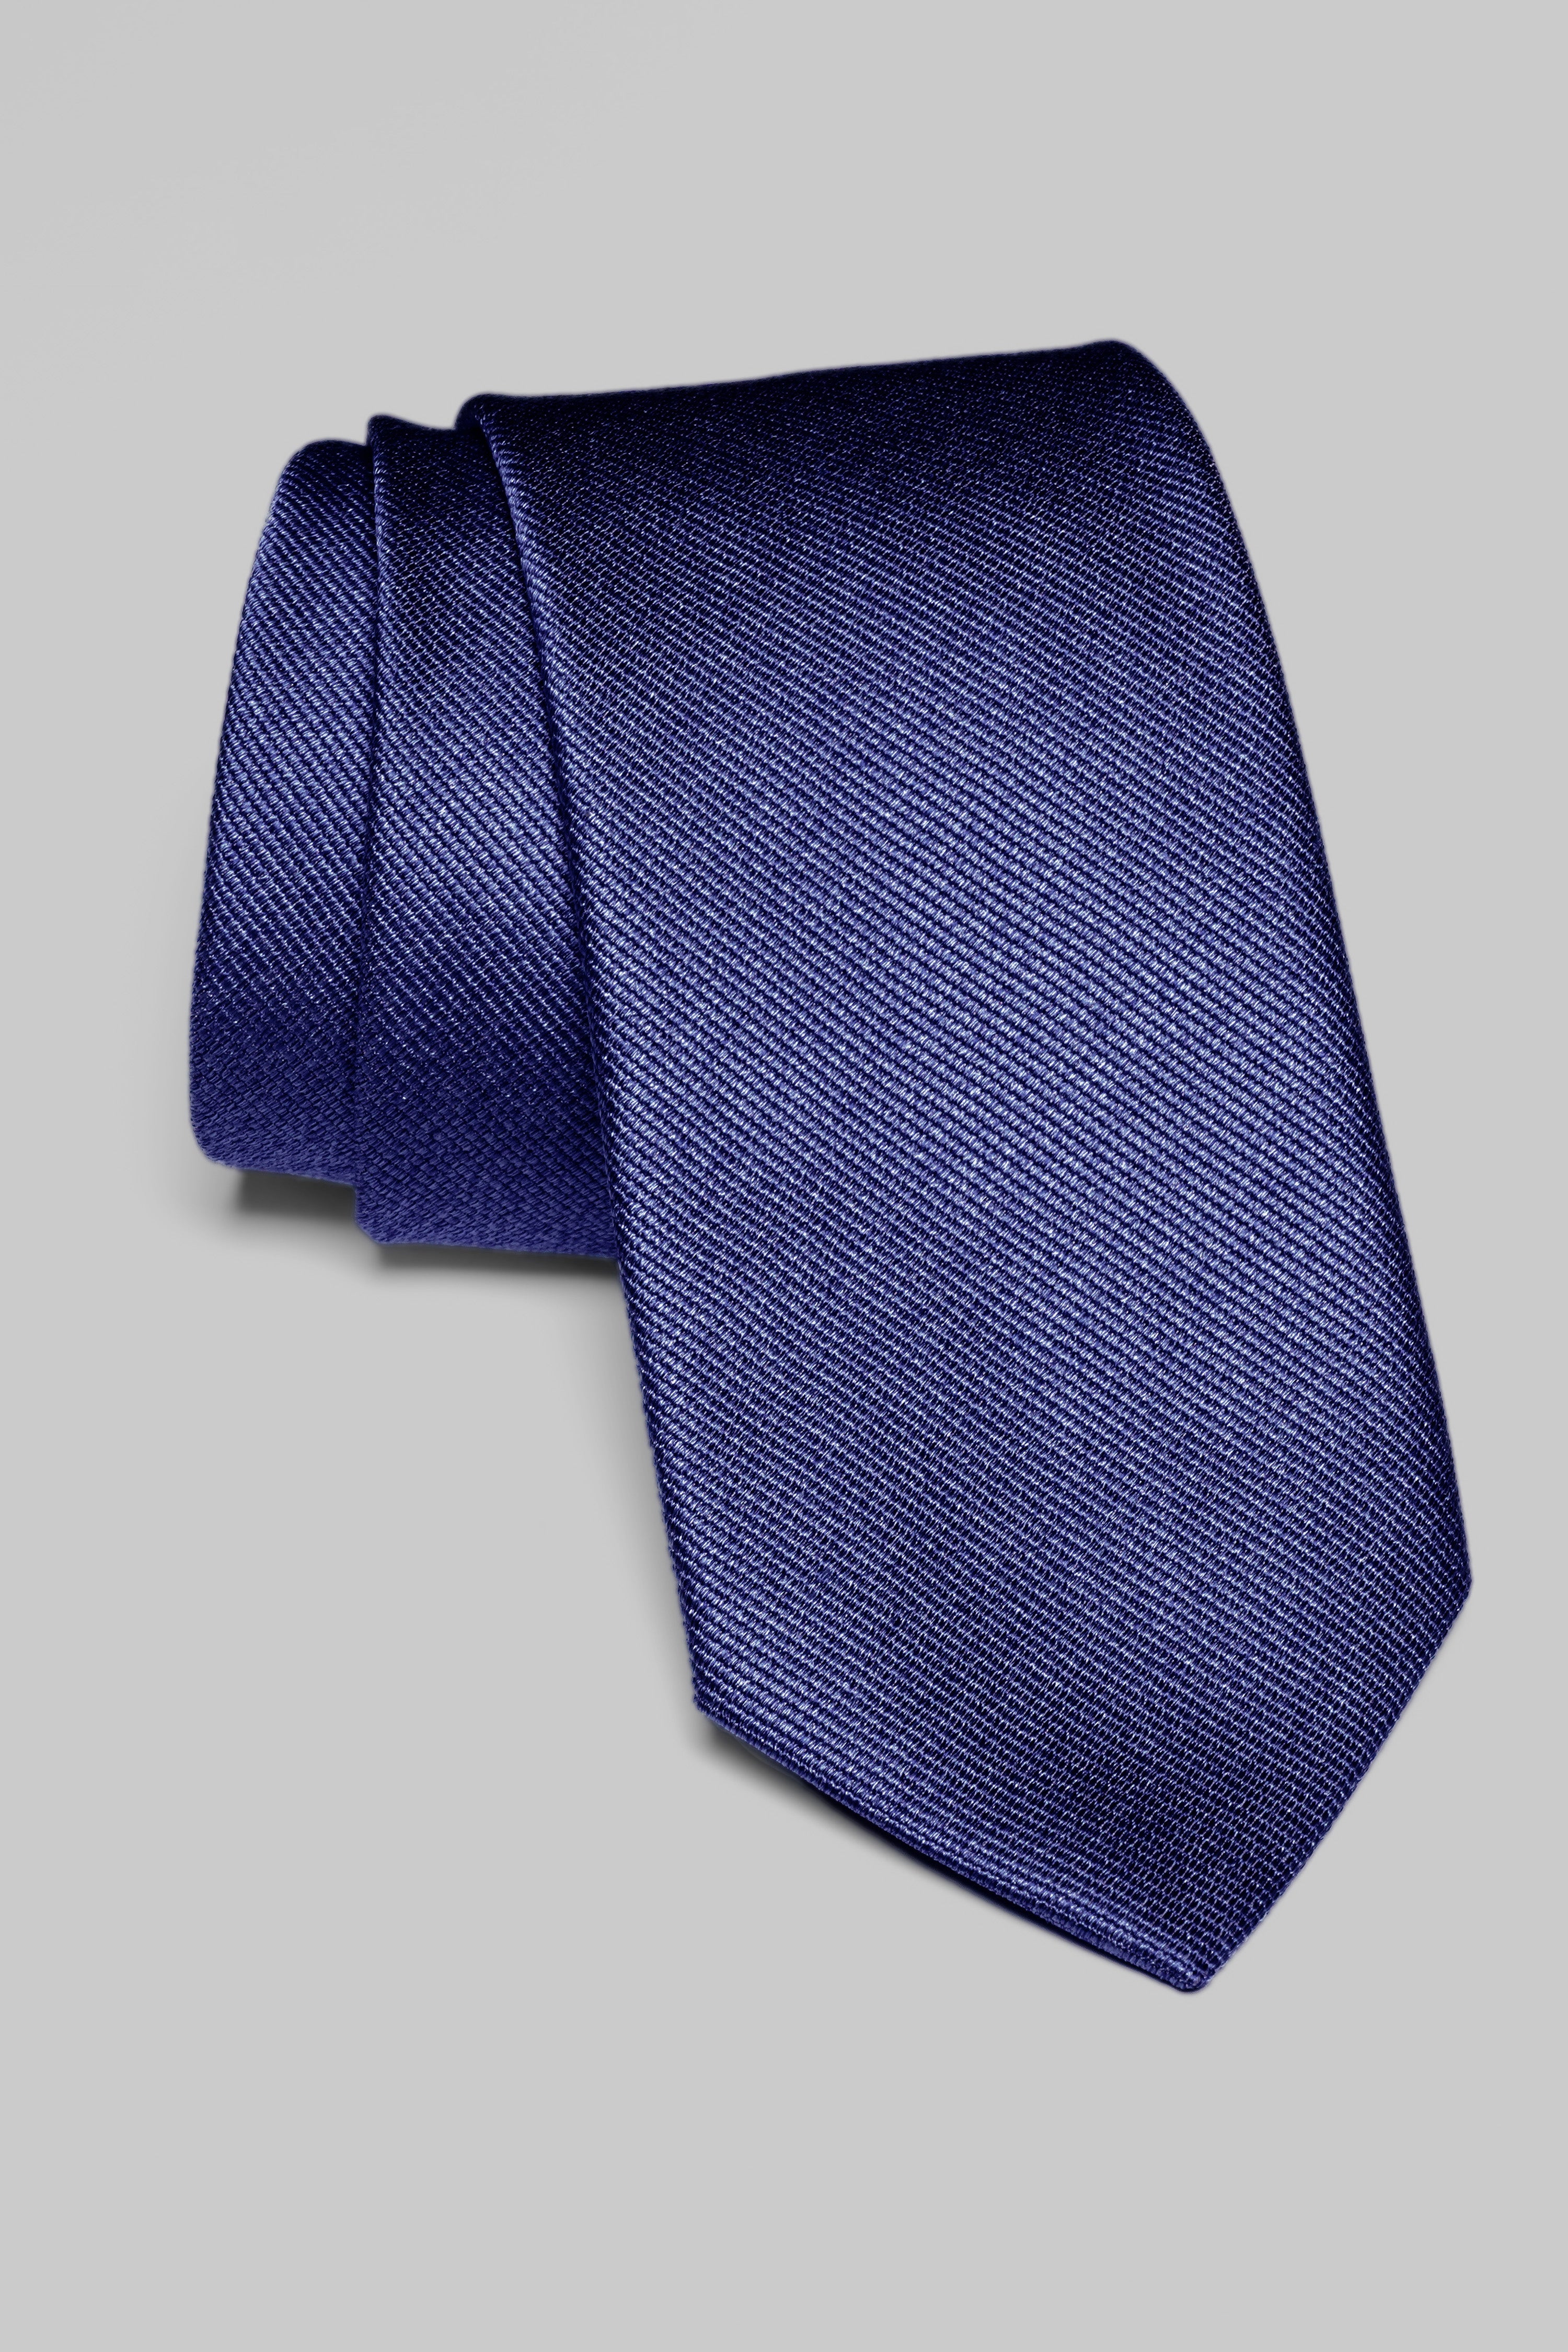 Alt view Bowman Solid Woven Tie in Denim Blue